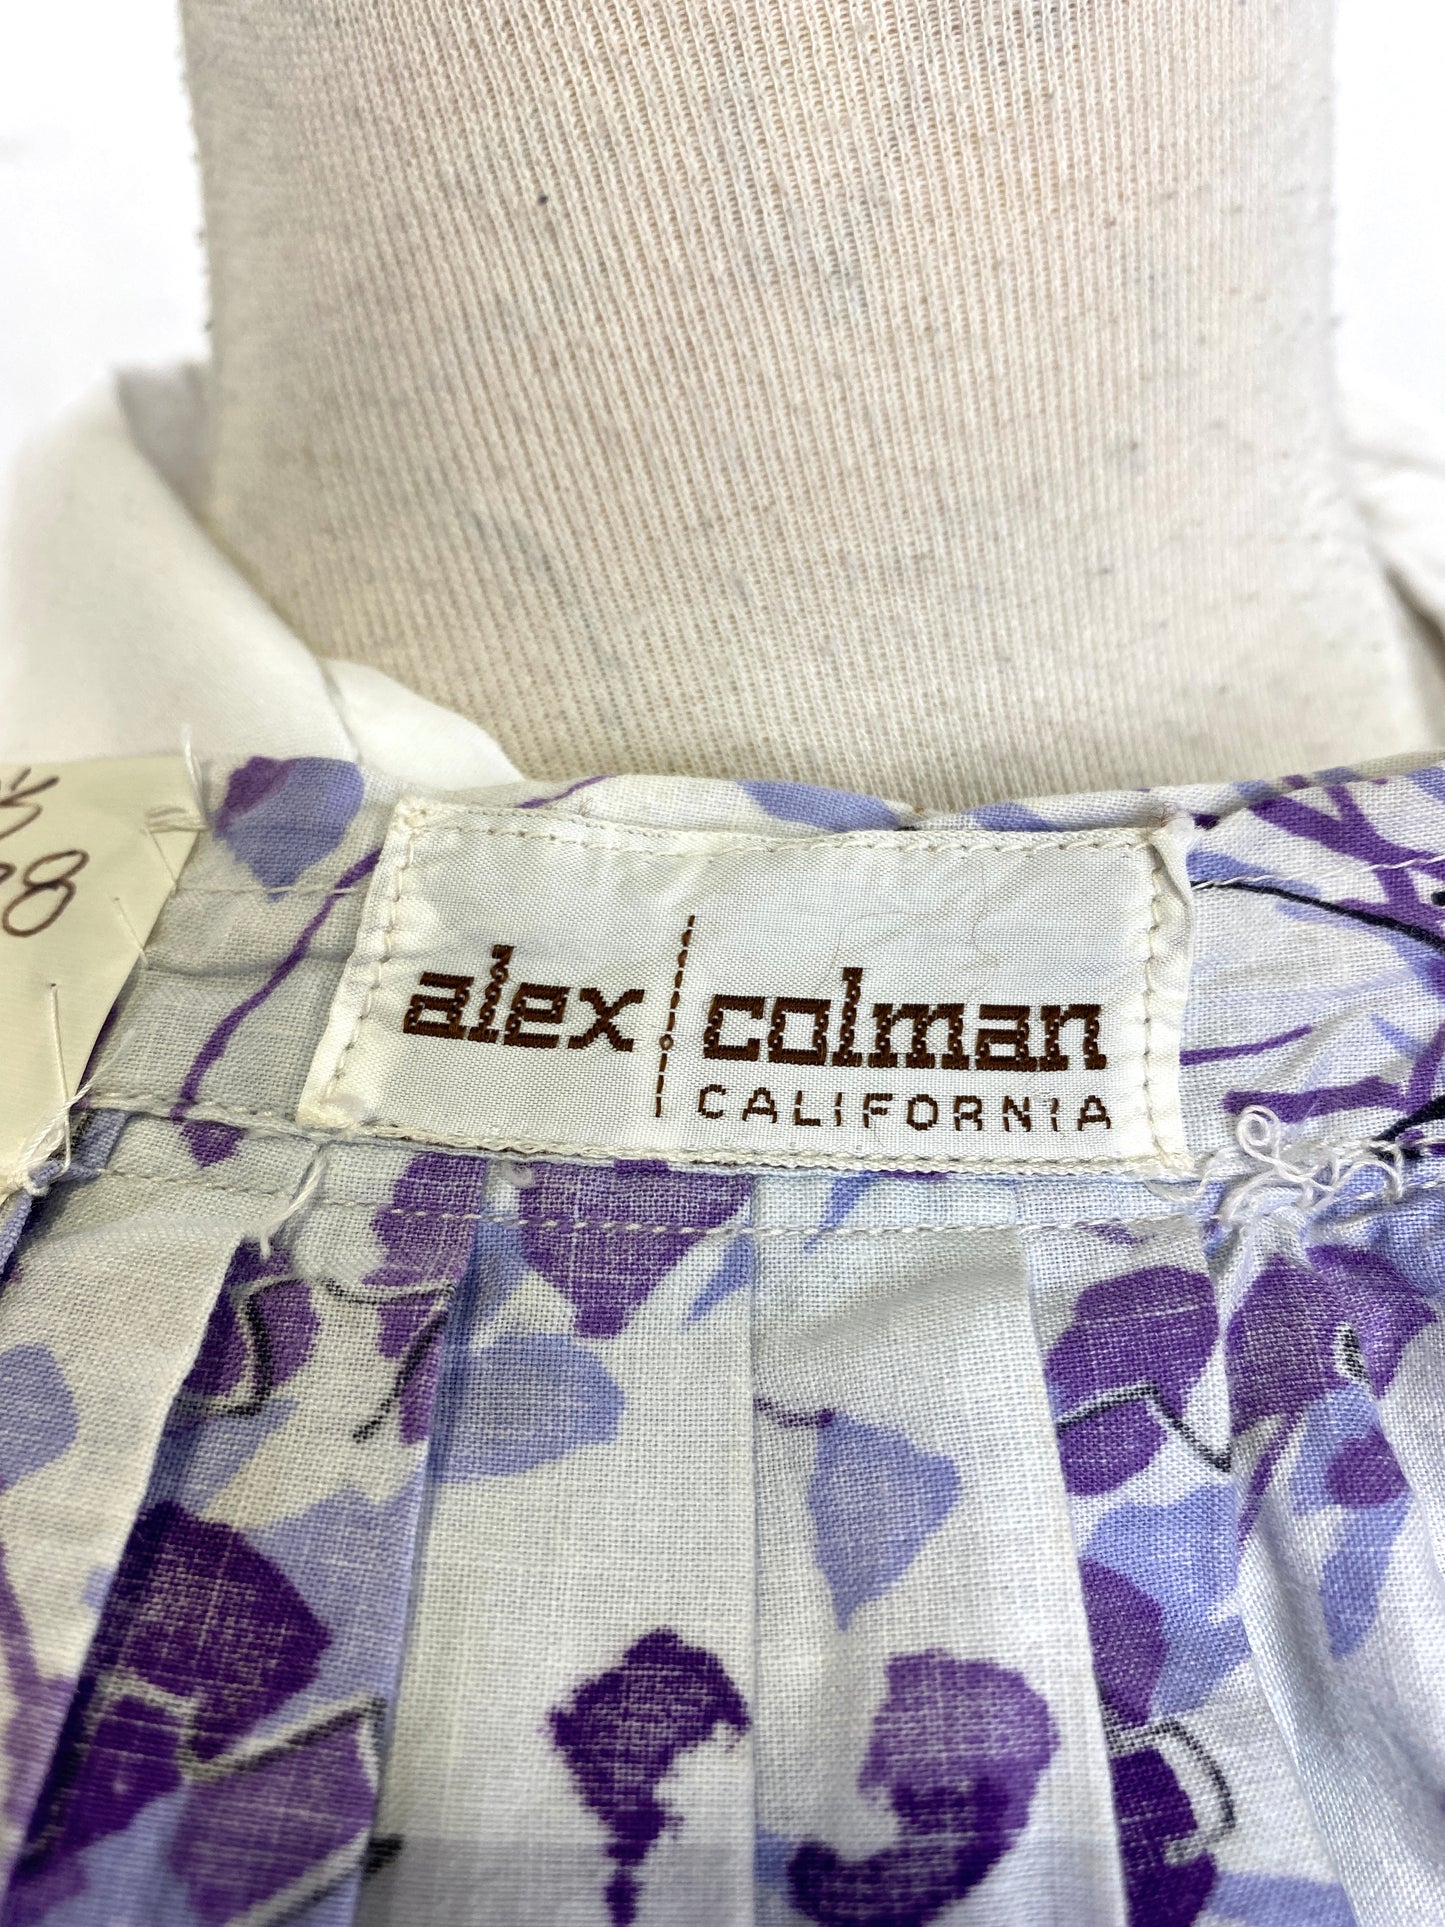 Alex Colman California clothing label on 1950s print skirt. Ian Drummond Vintage. 